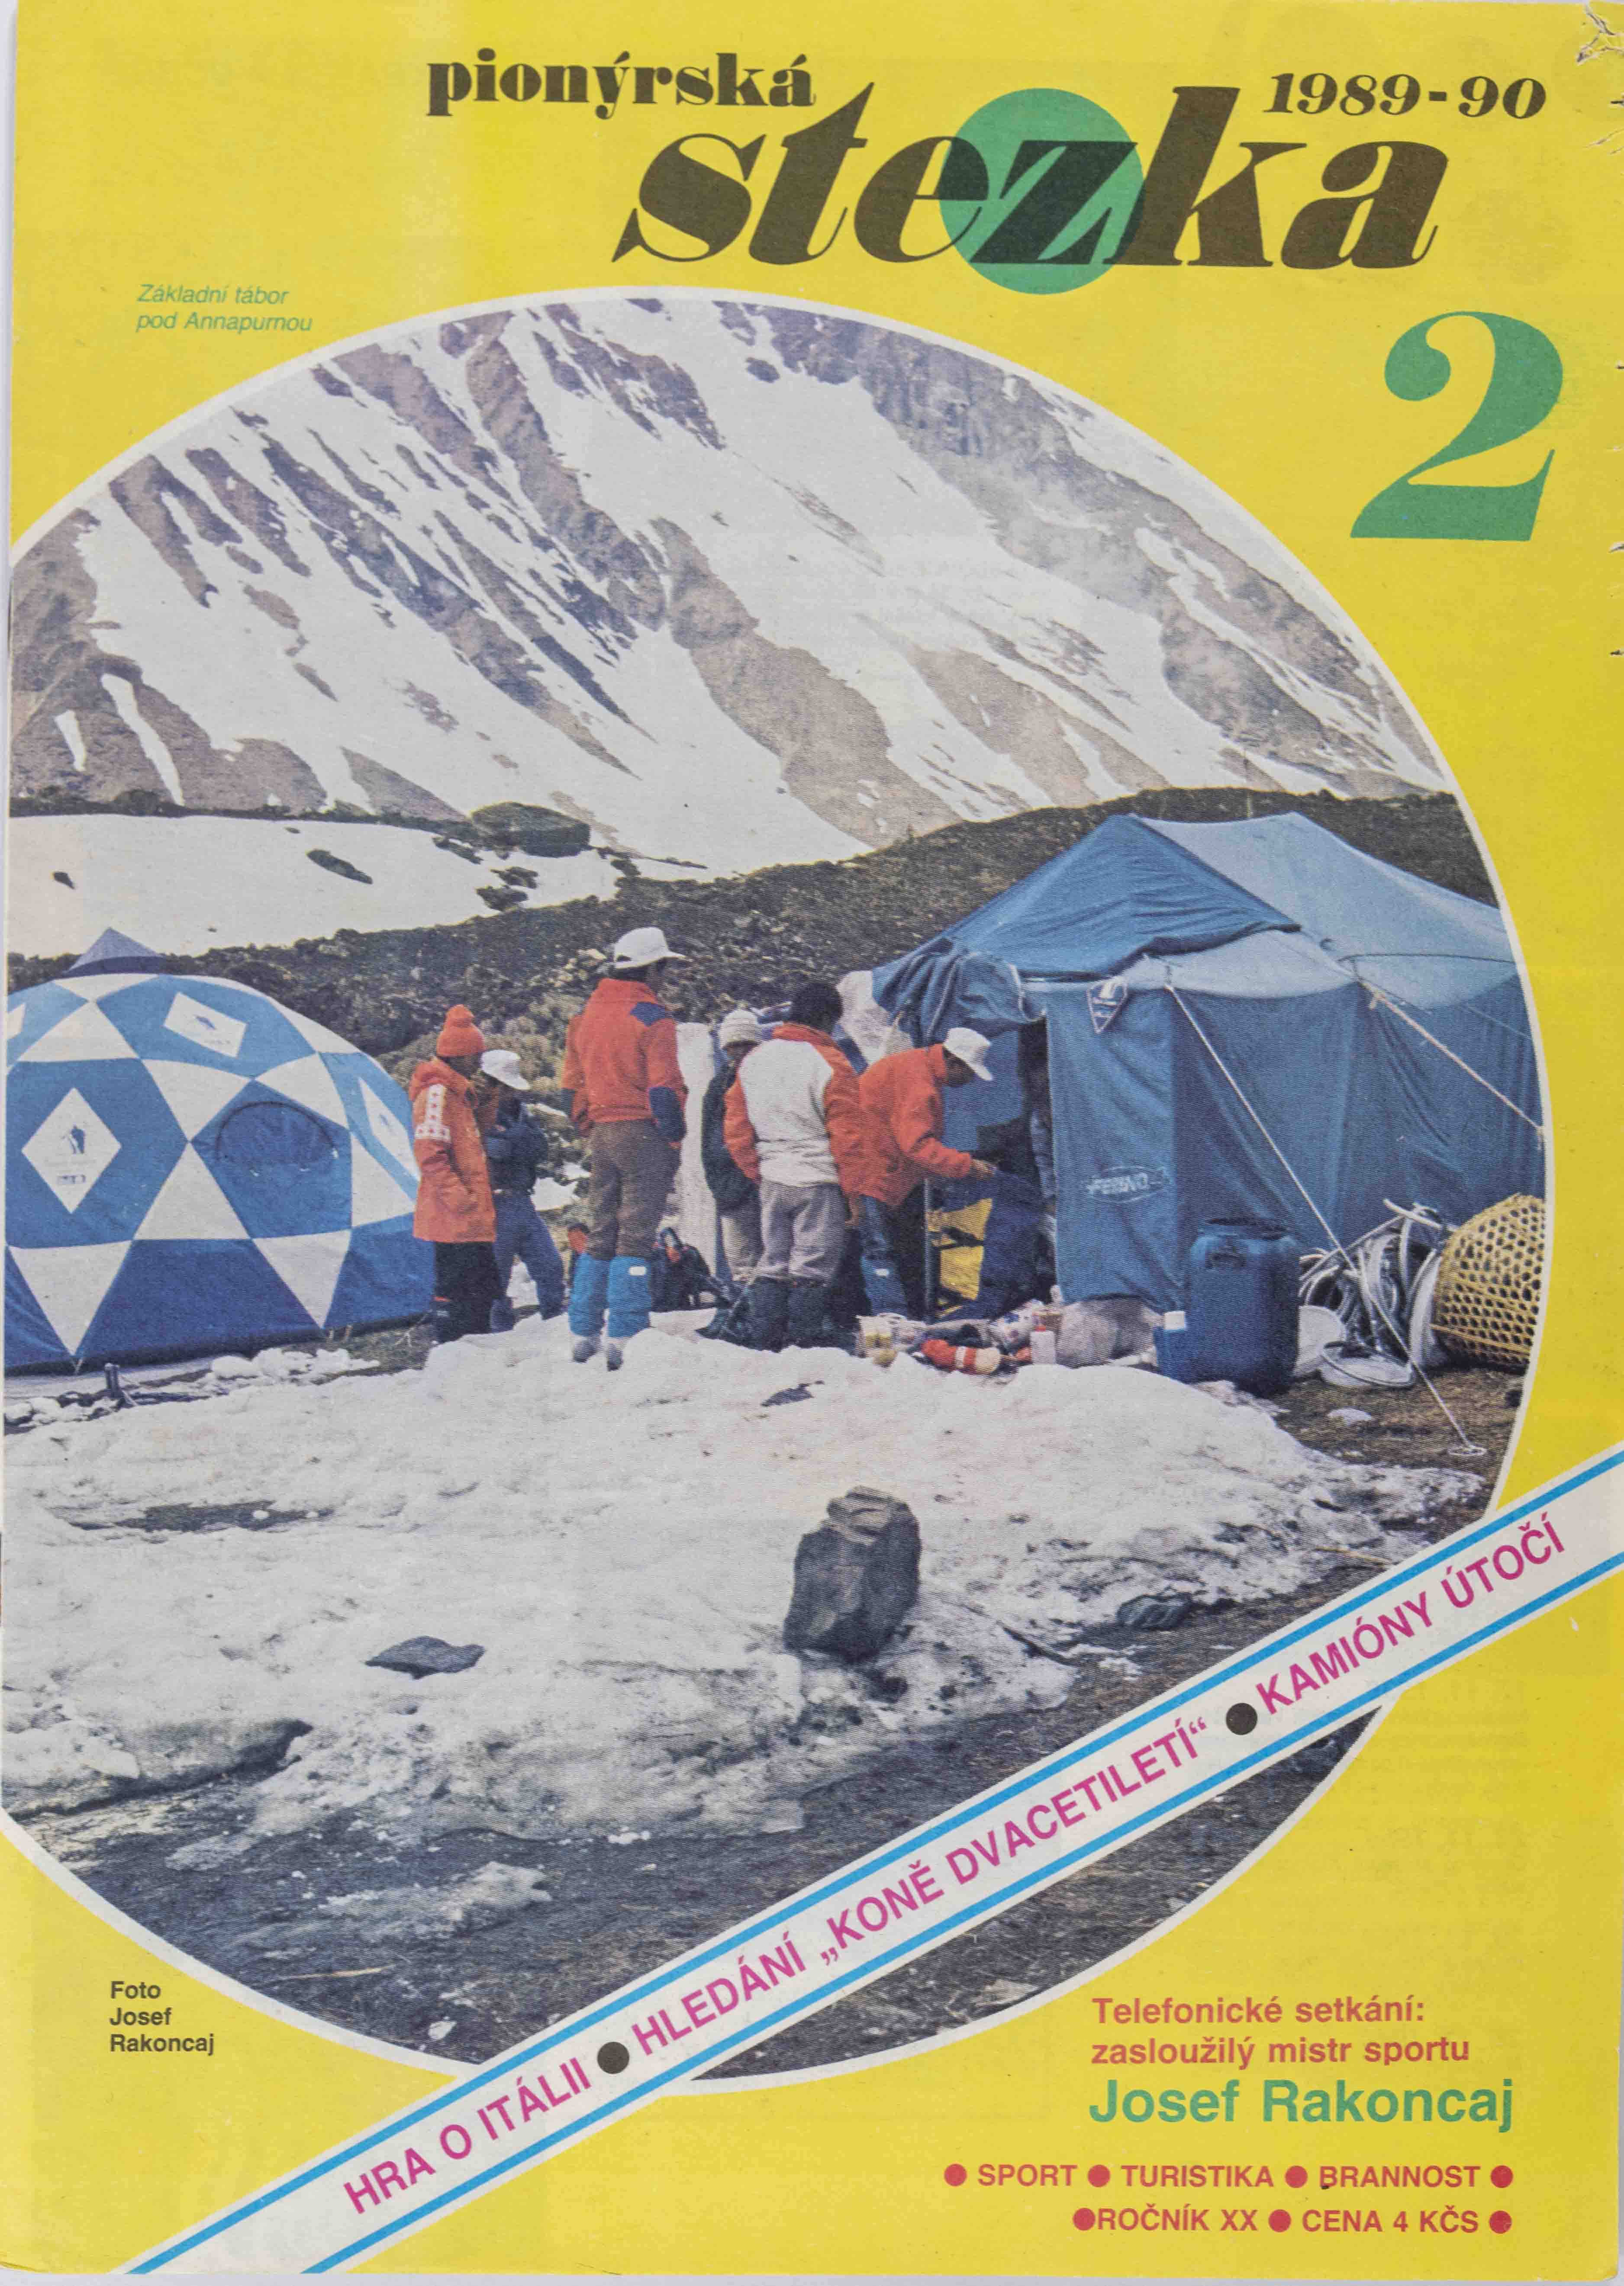 Časopis , Pionýrská stezka, 2/1989-90